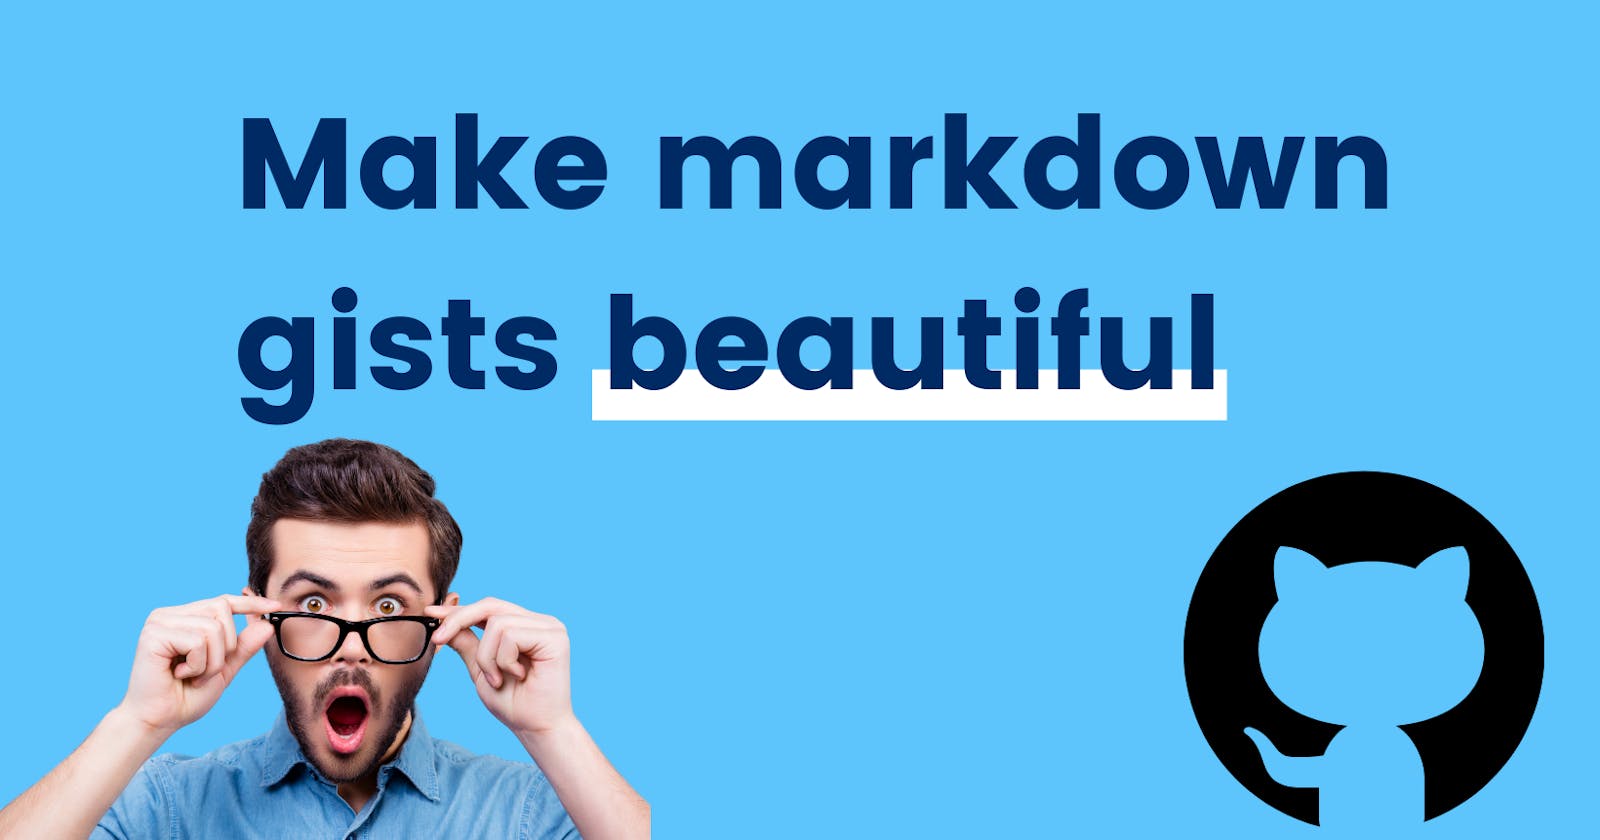 Make markdown gists beautiful in 2 mins!